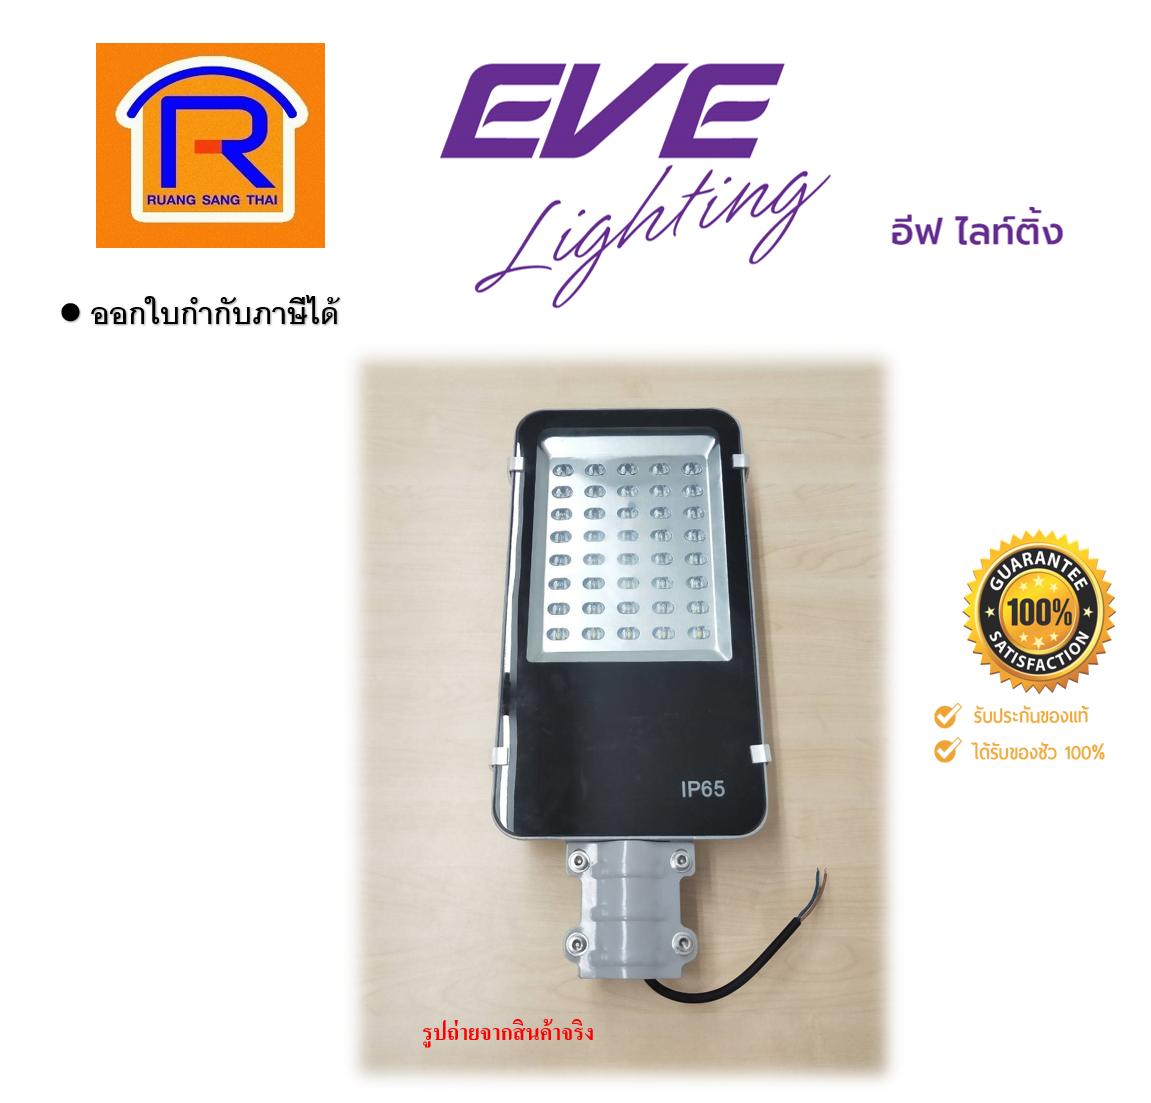 EVE lighting LED Street Light Mini EVE